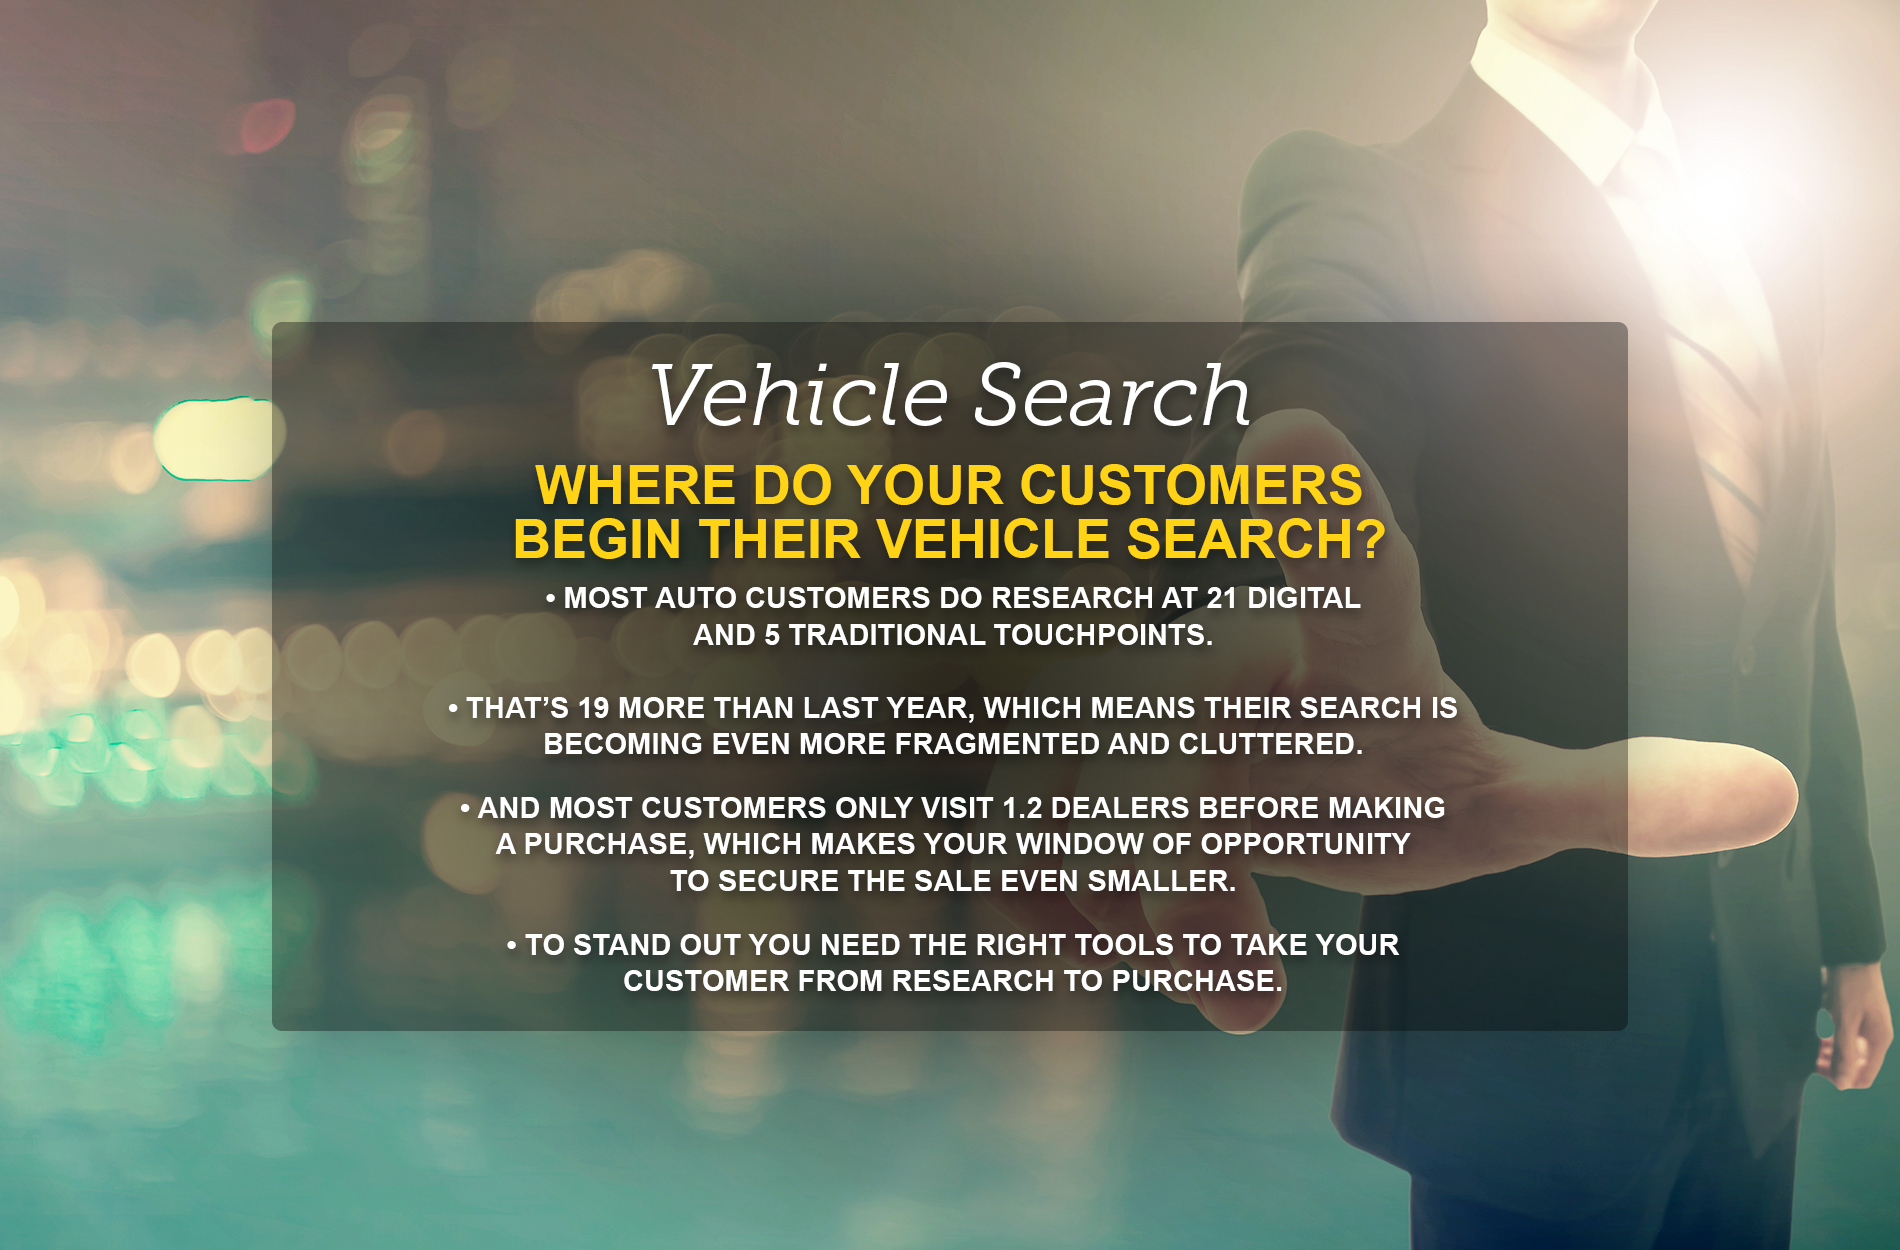 EZ Auto Offers Vehicle Search Services